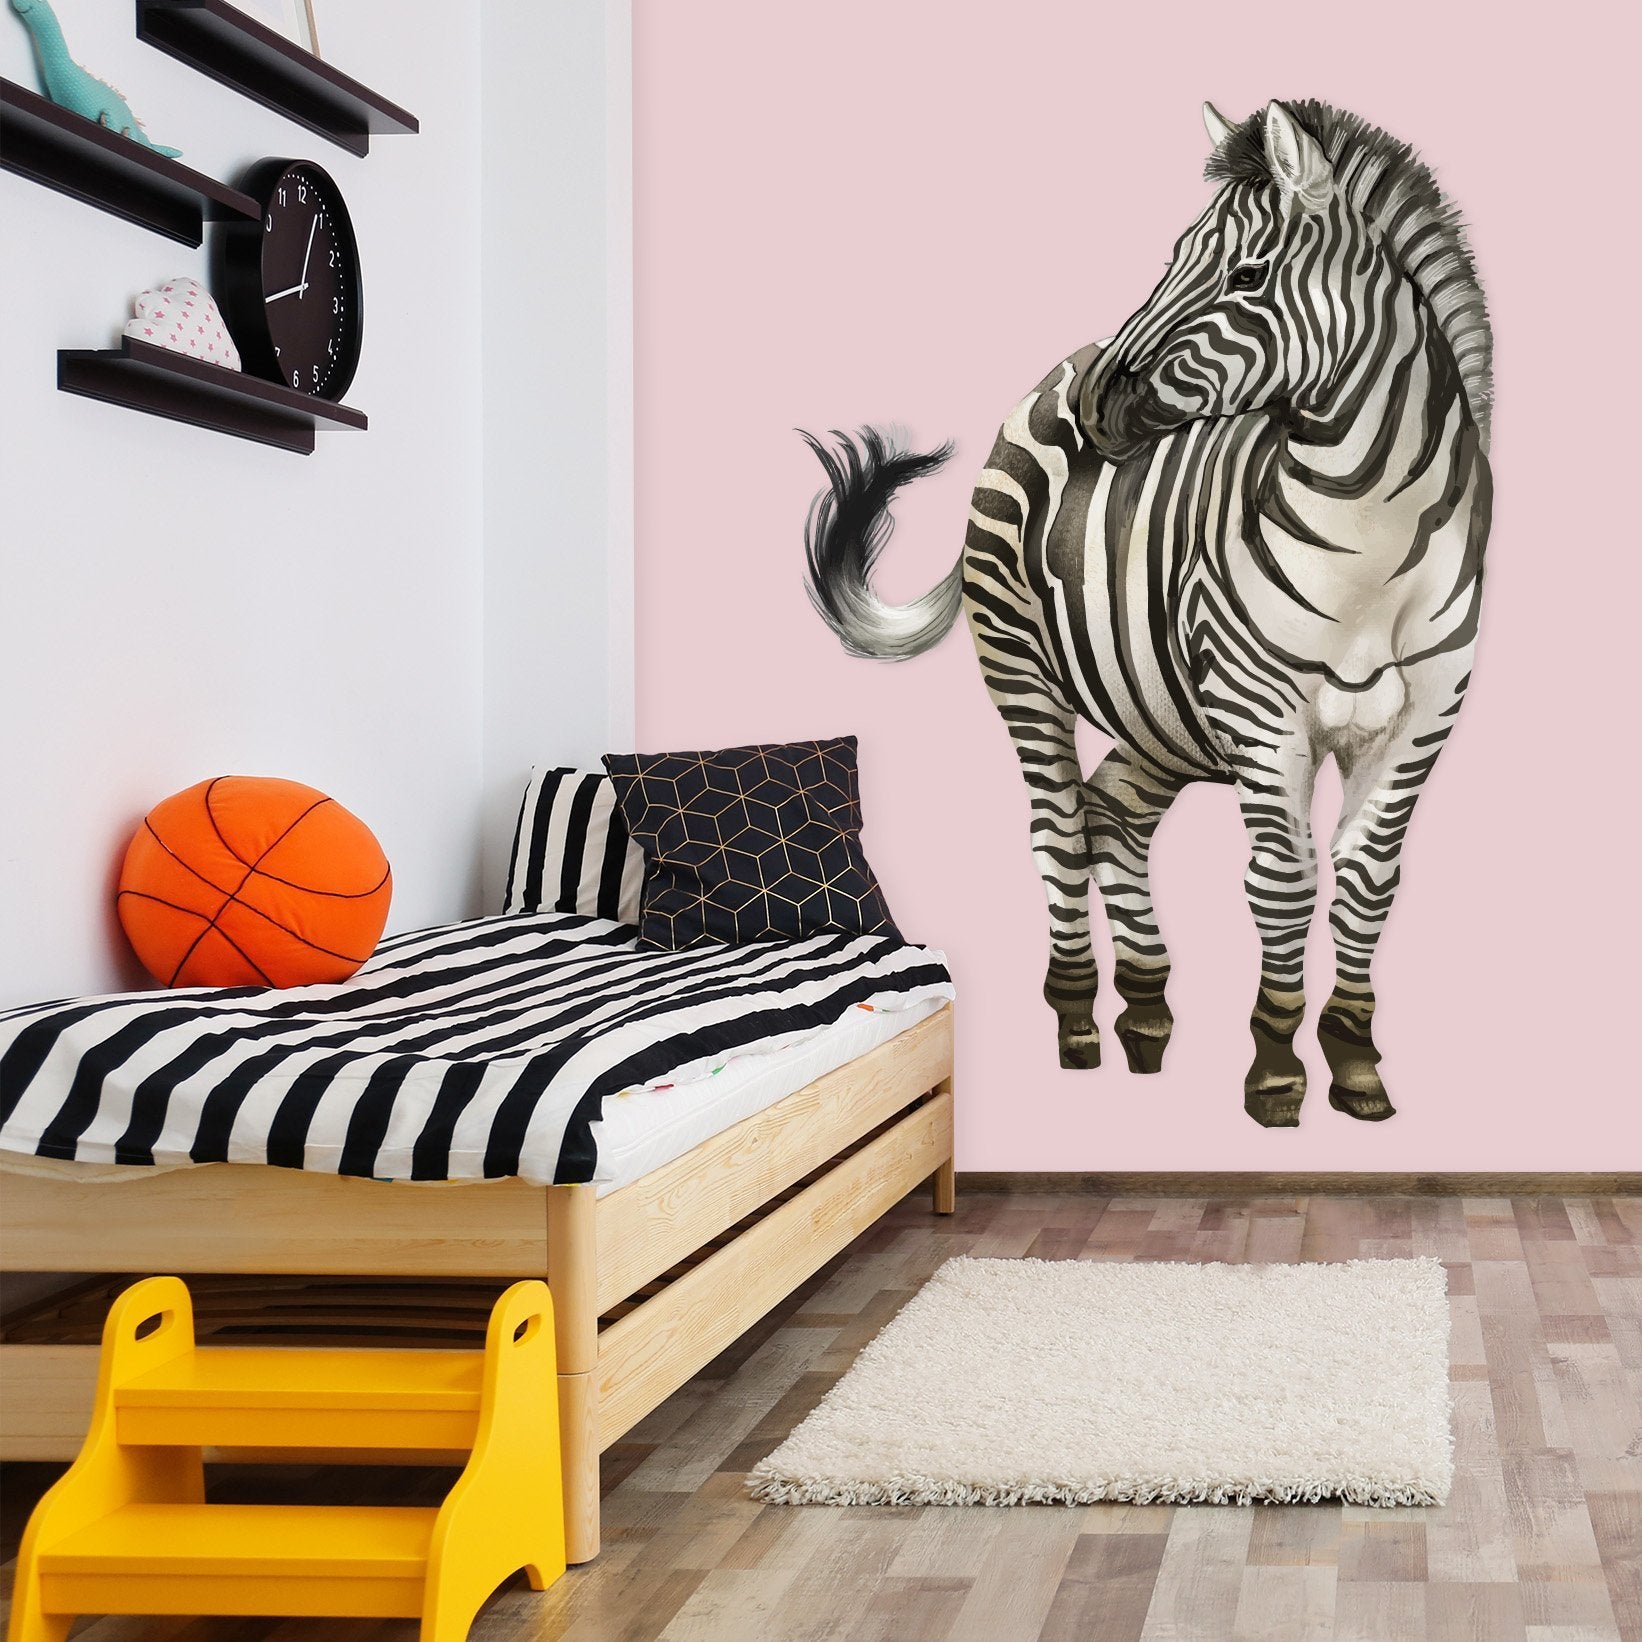 3D Zebra Turned To Look Behind 185 Animals Wall Stickers Wallpaper AJ Wallpaper 